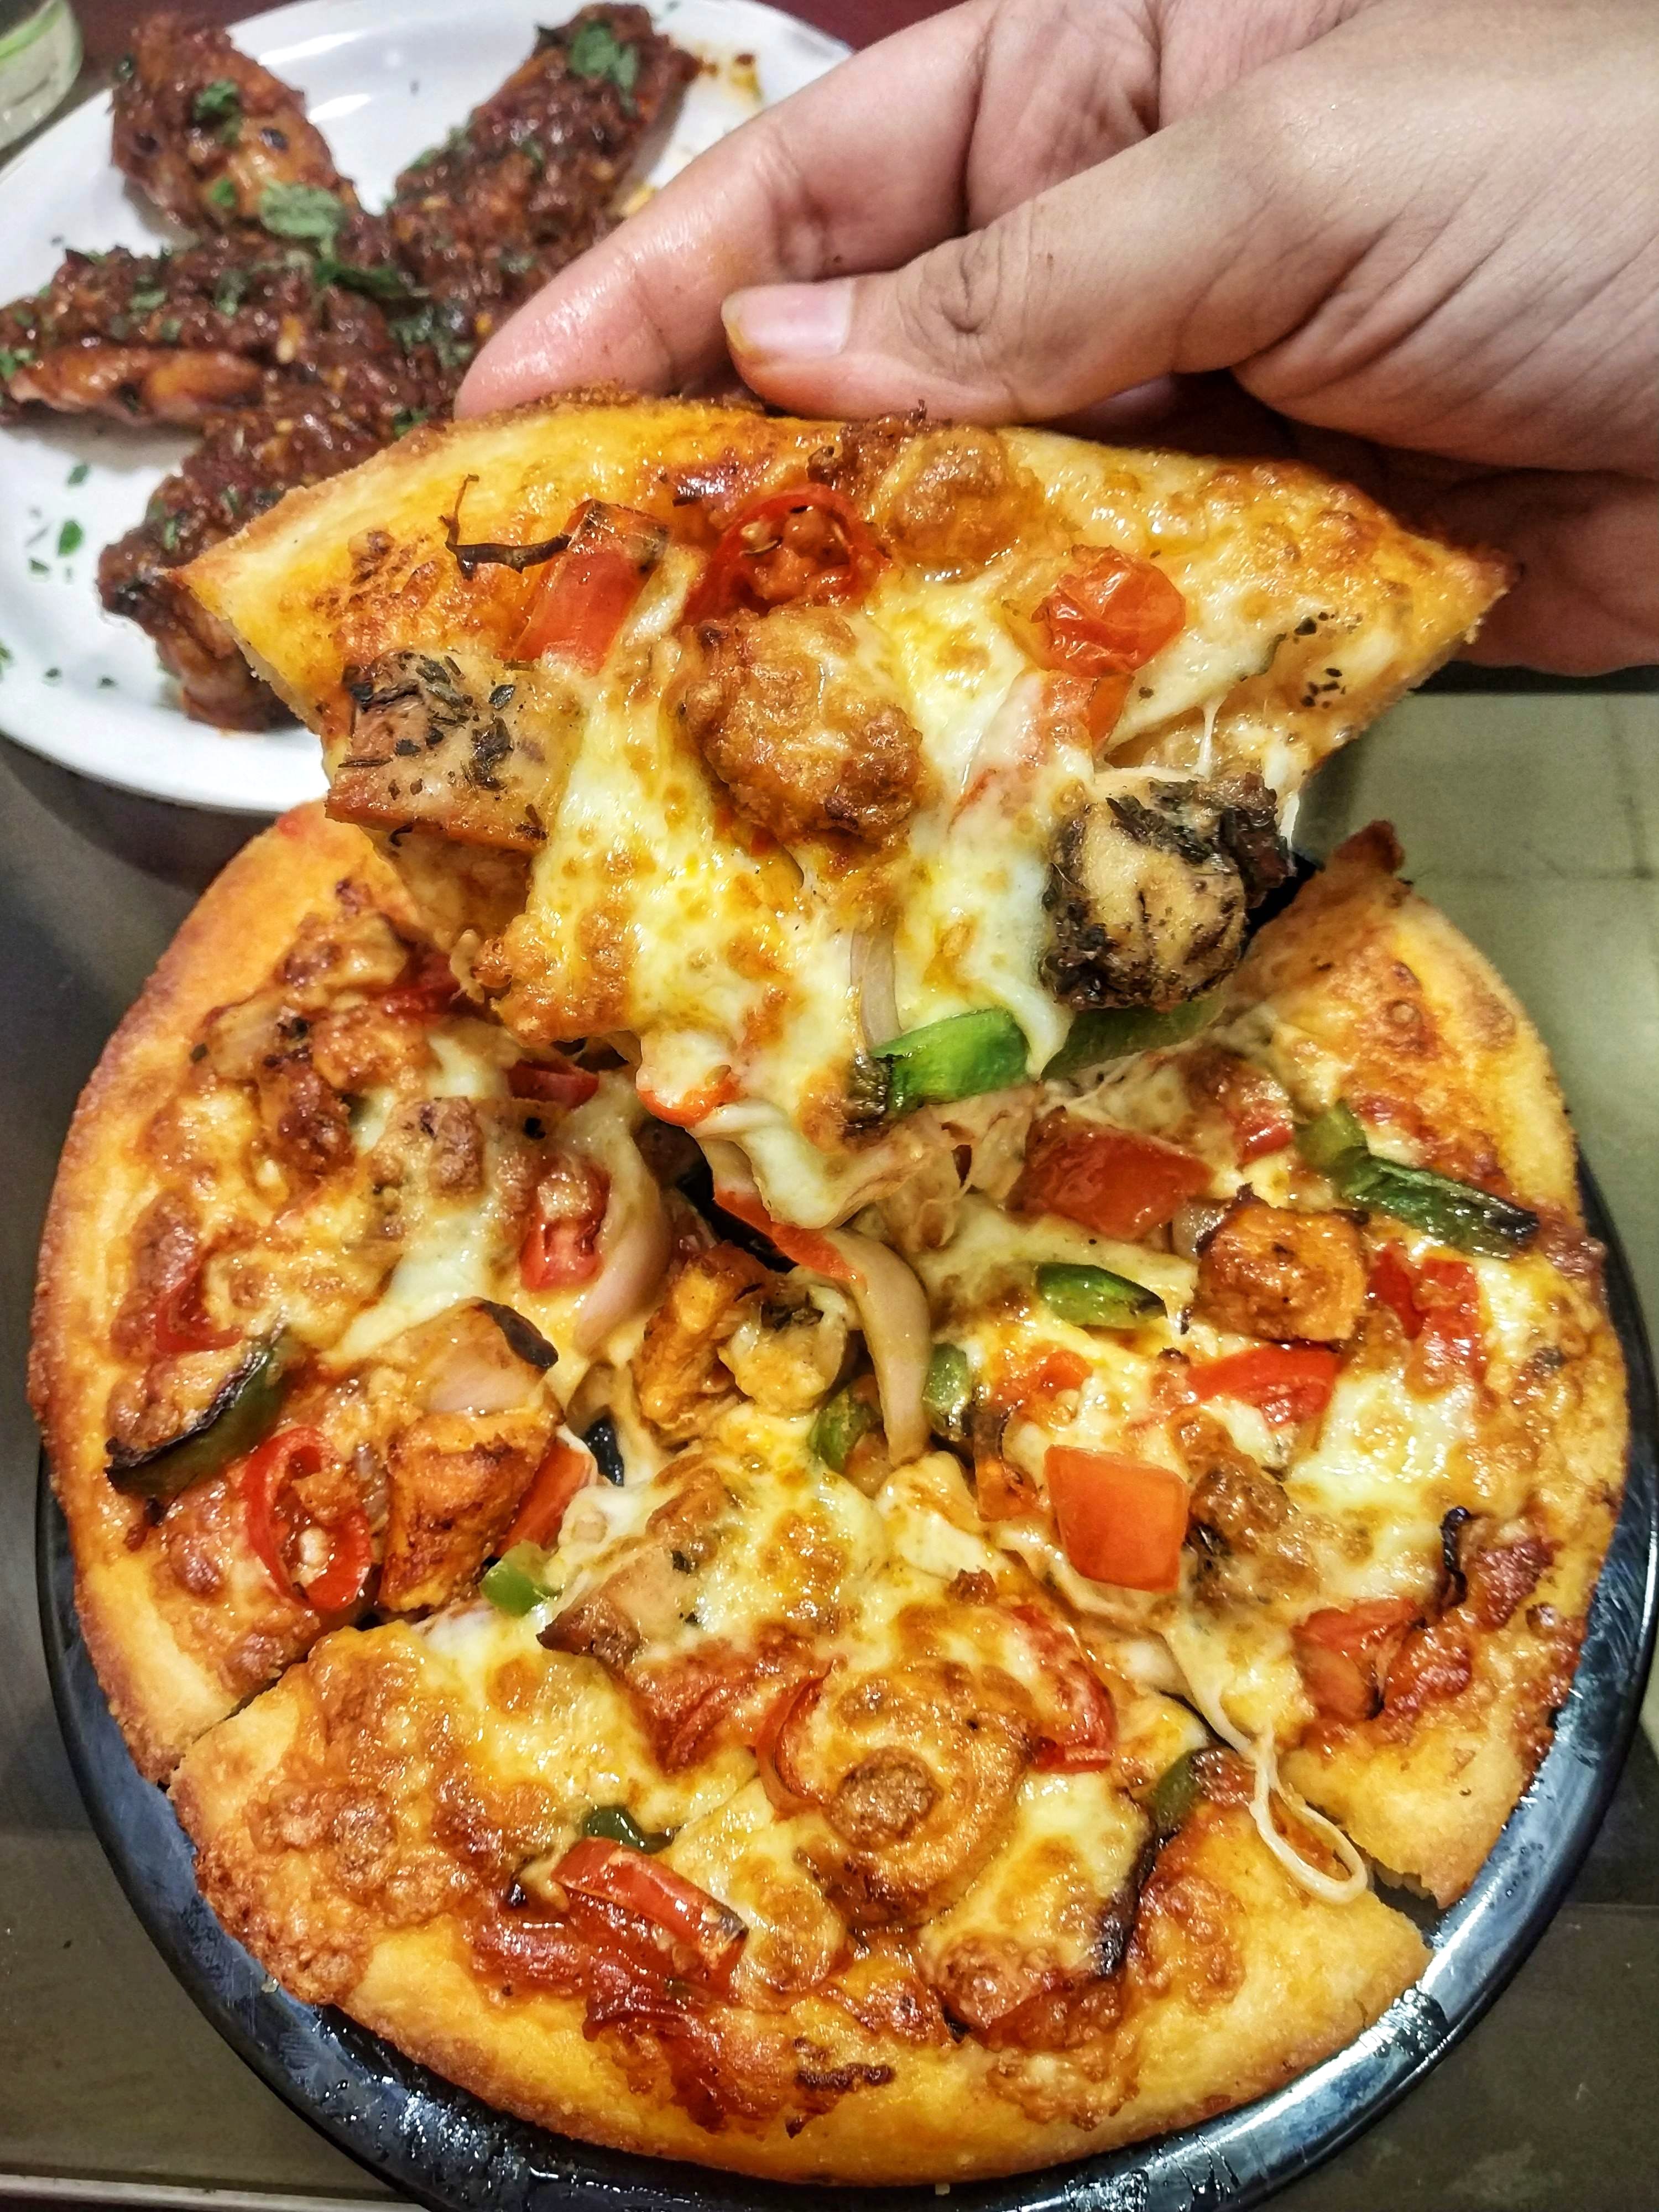 Dish,Food,Cuisine,Pizza,Pizza cheese,California-style pizza,Ingredient,Flatbread,Italian food,Quiche